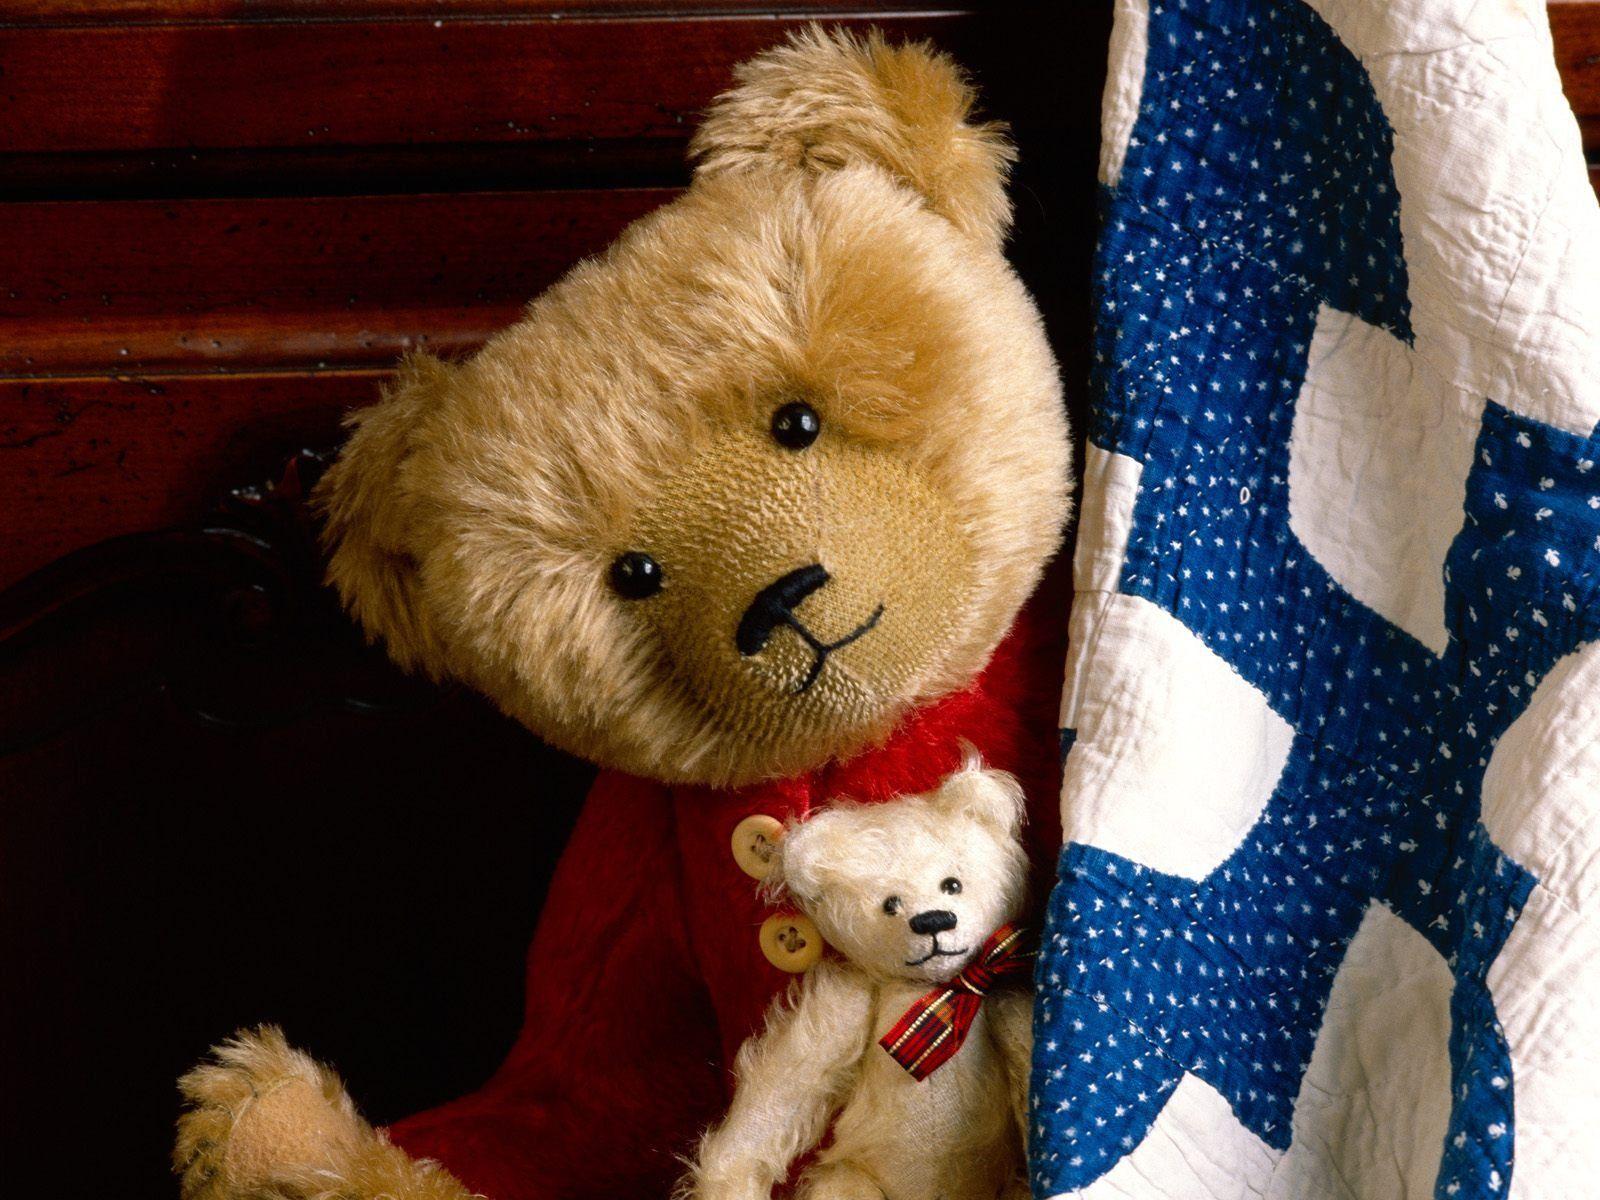 Teddy Bear smile Wallpaper download. Teddy bear picture